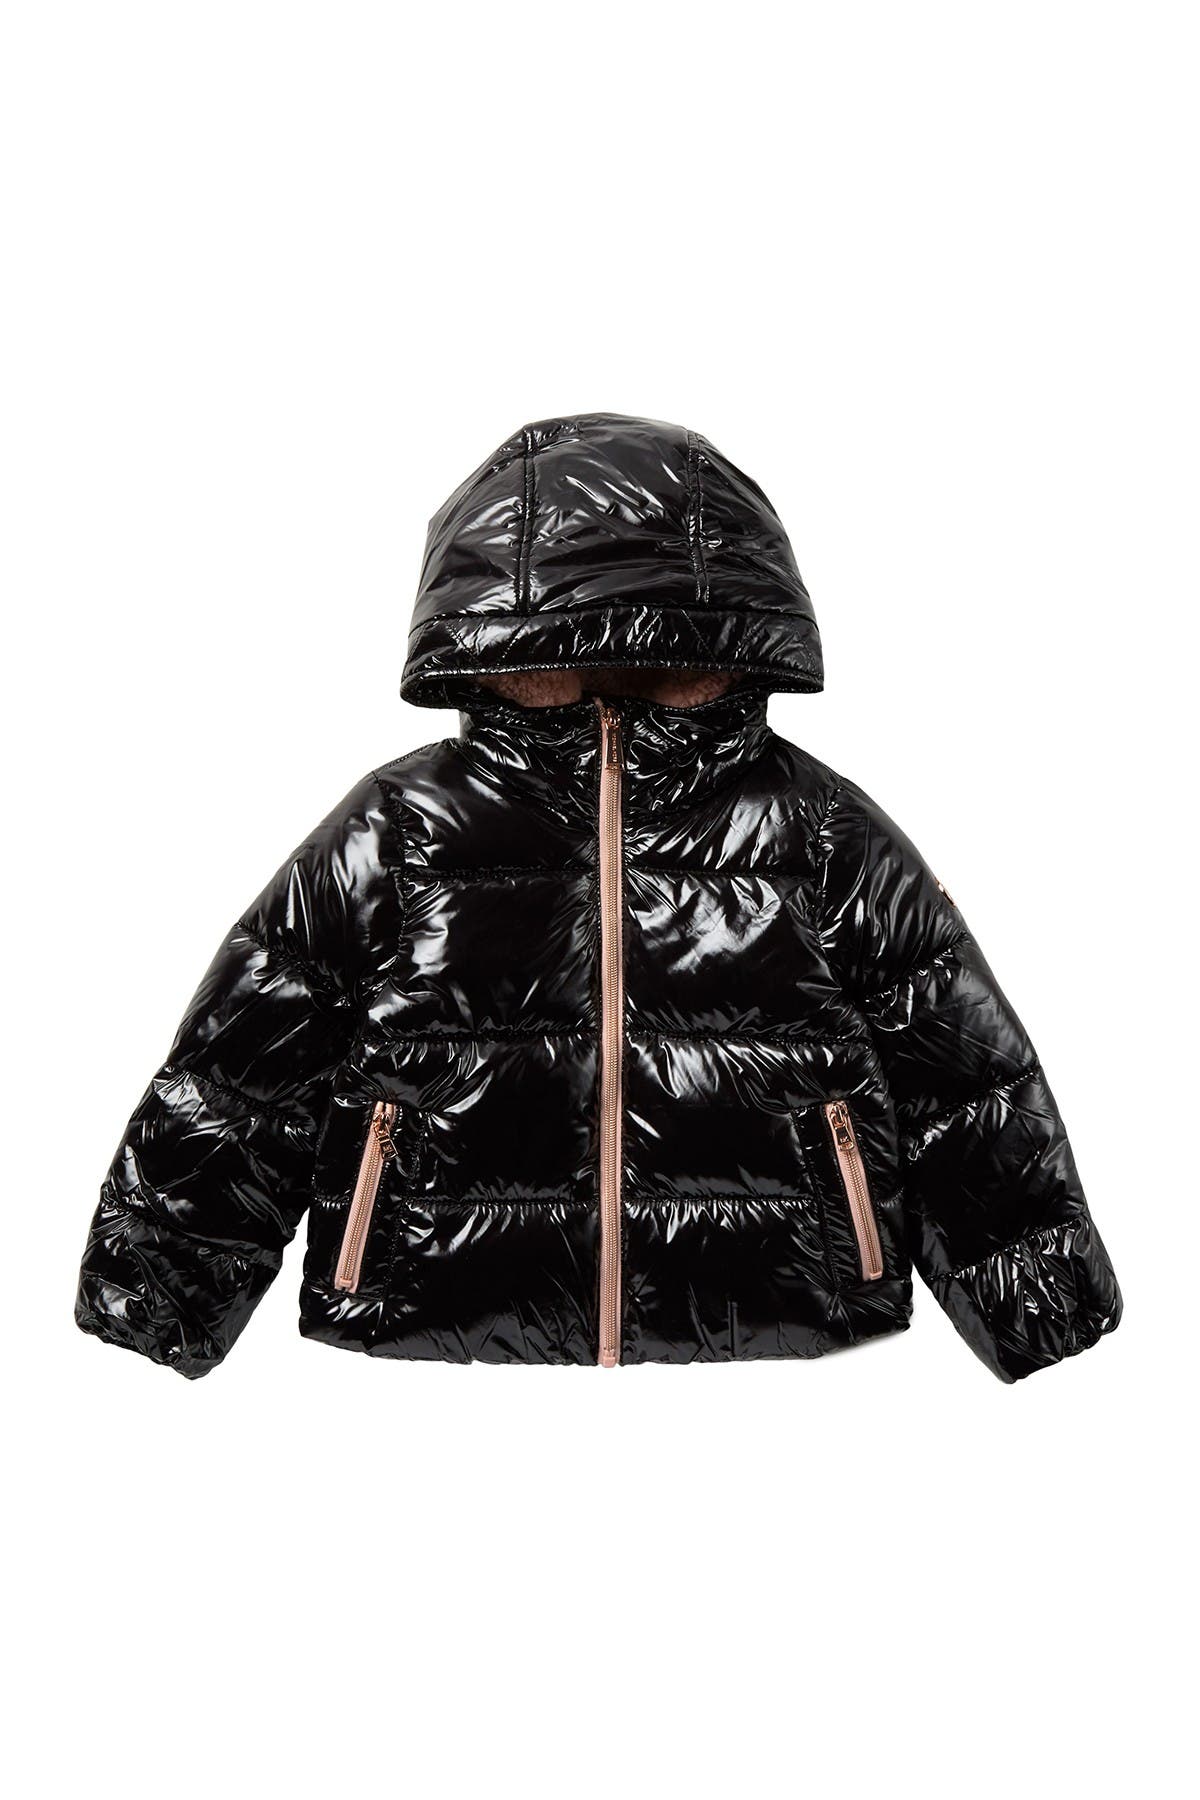 michael kors toddler winter coat